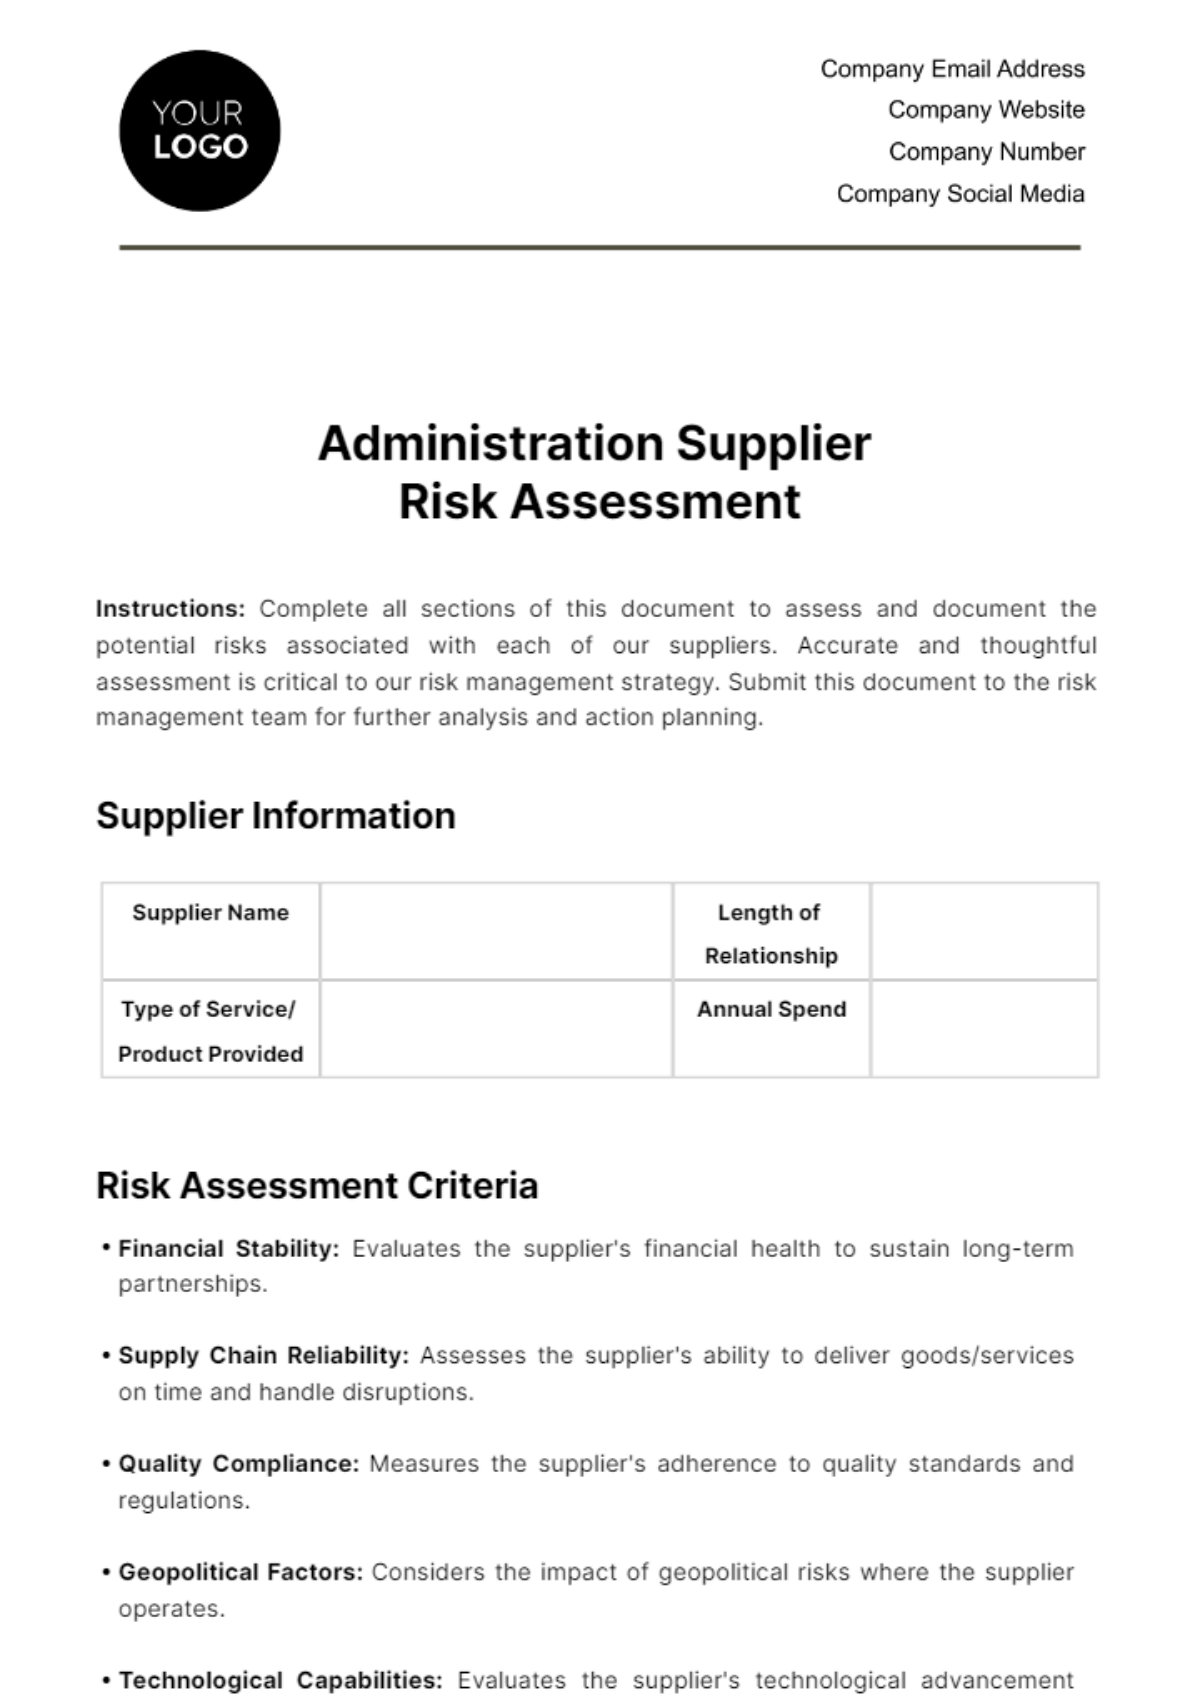 Administration Supplier Risk Assessment Template